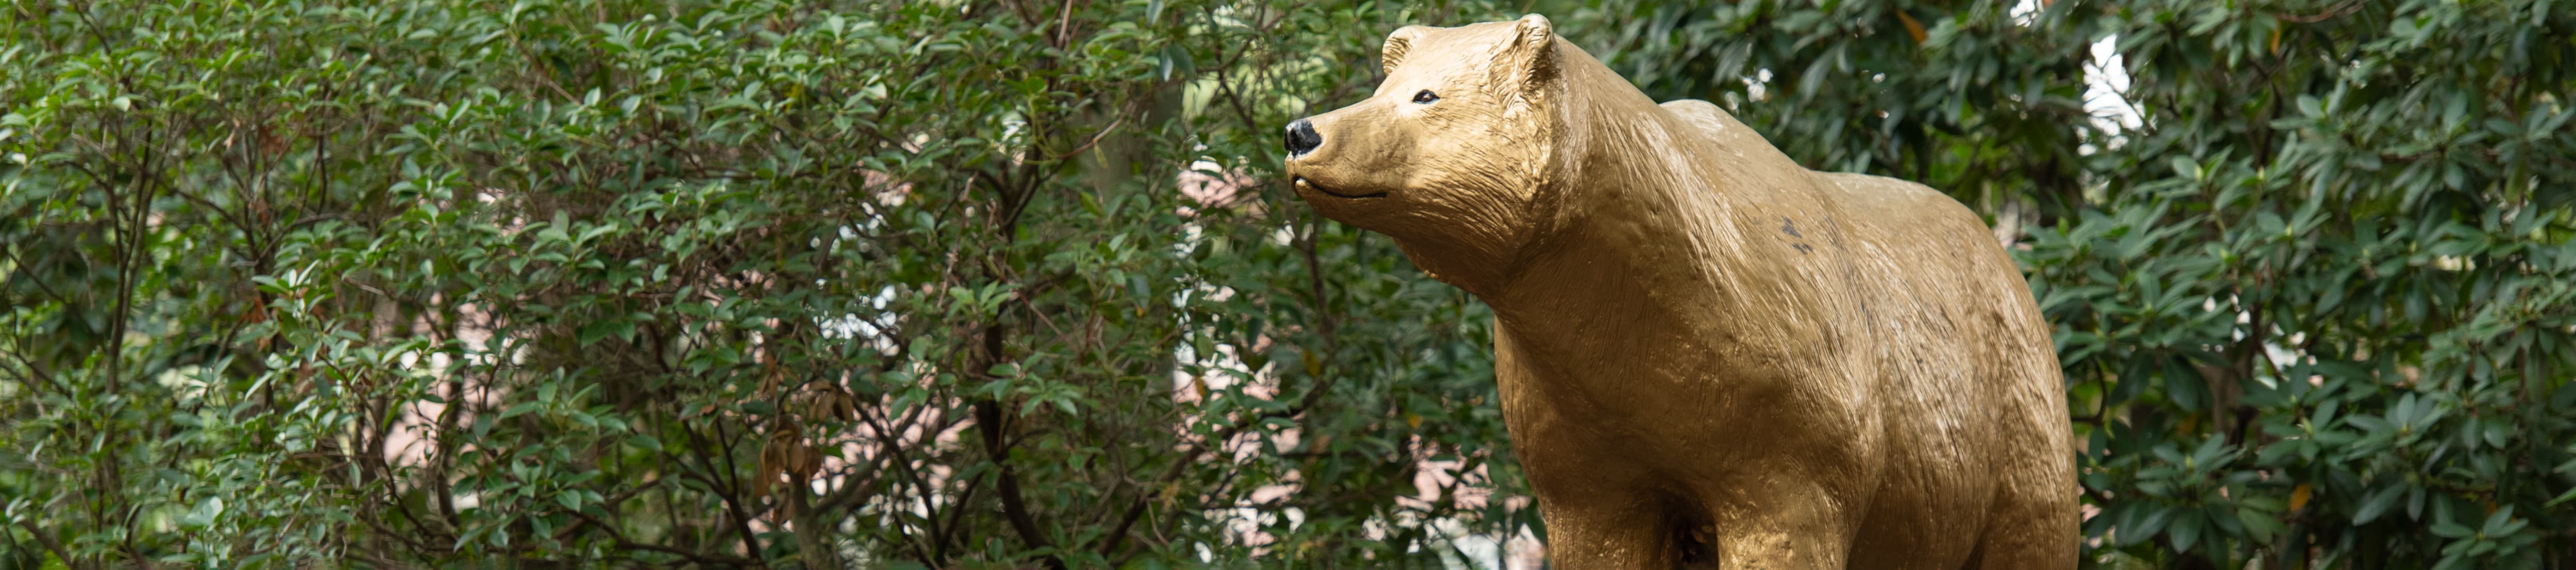 Golden Bear statue on campus